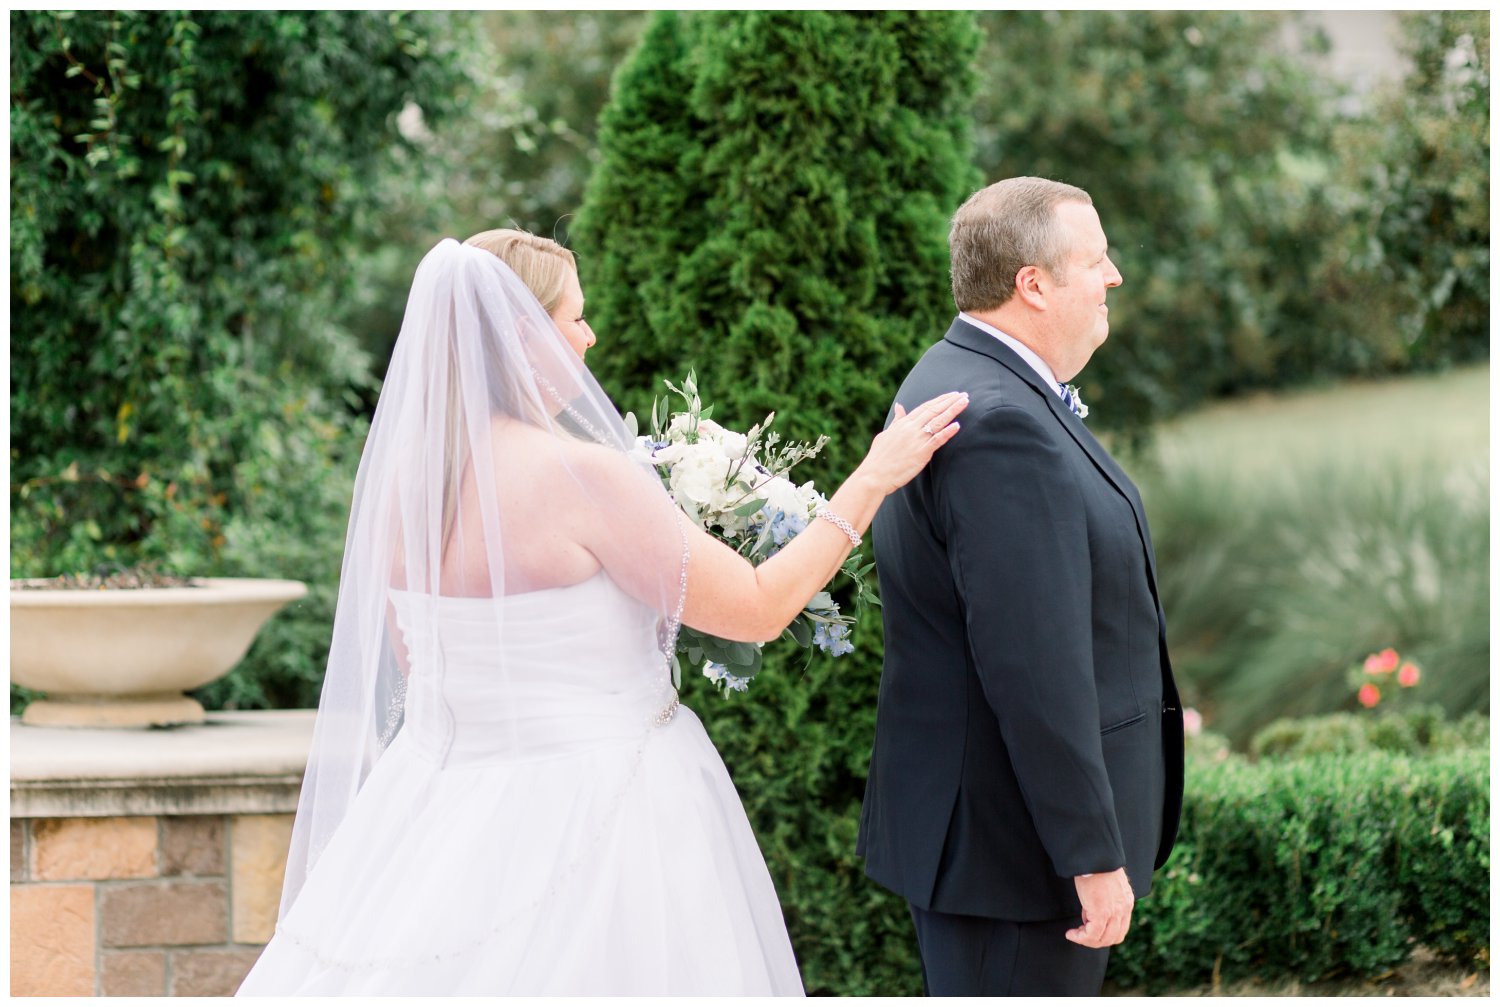 Garden inspired wedding in Charlotte North Carolina by top wedding photographer Samantha Laffoon